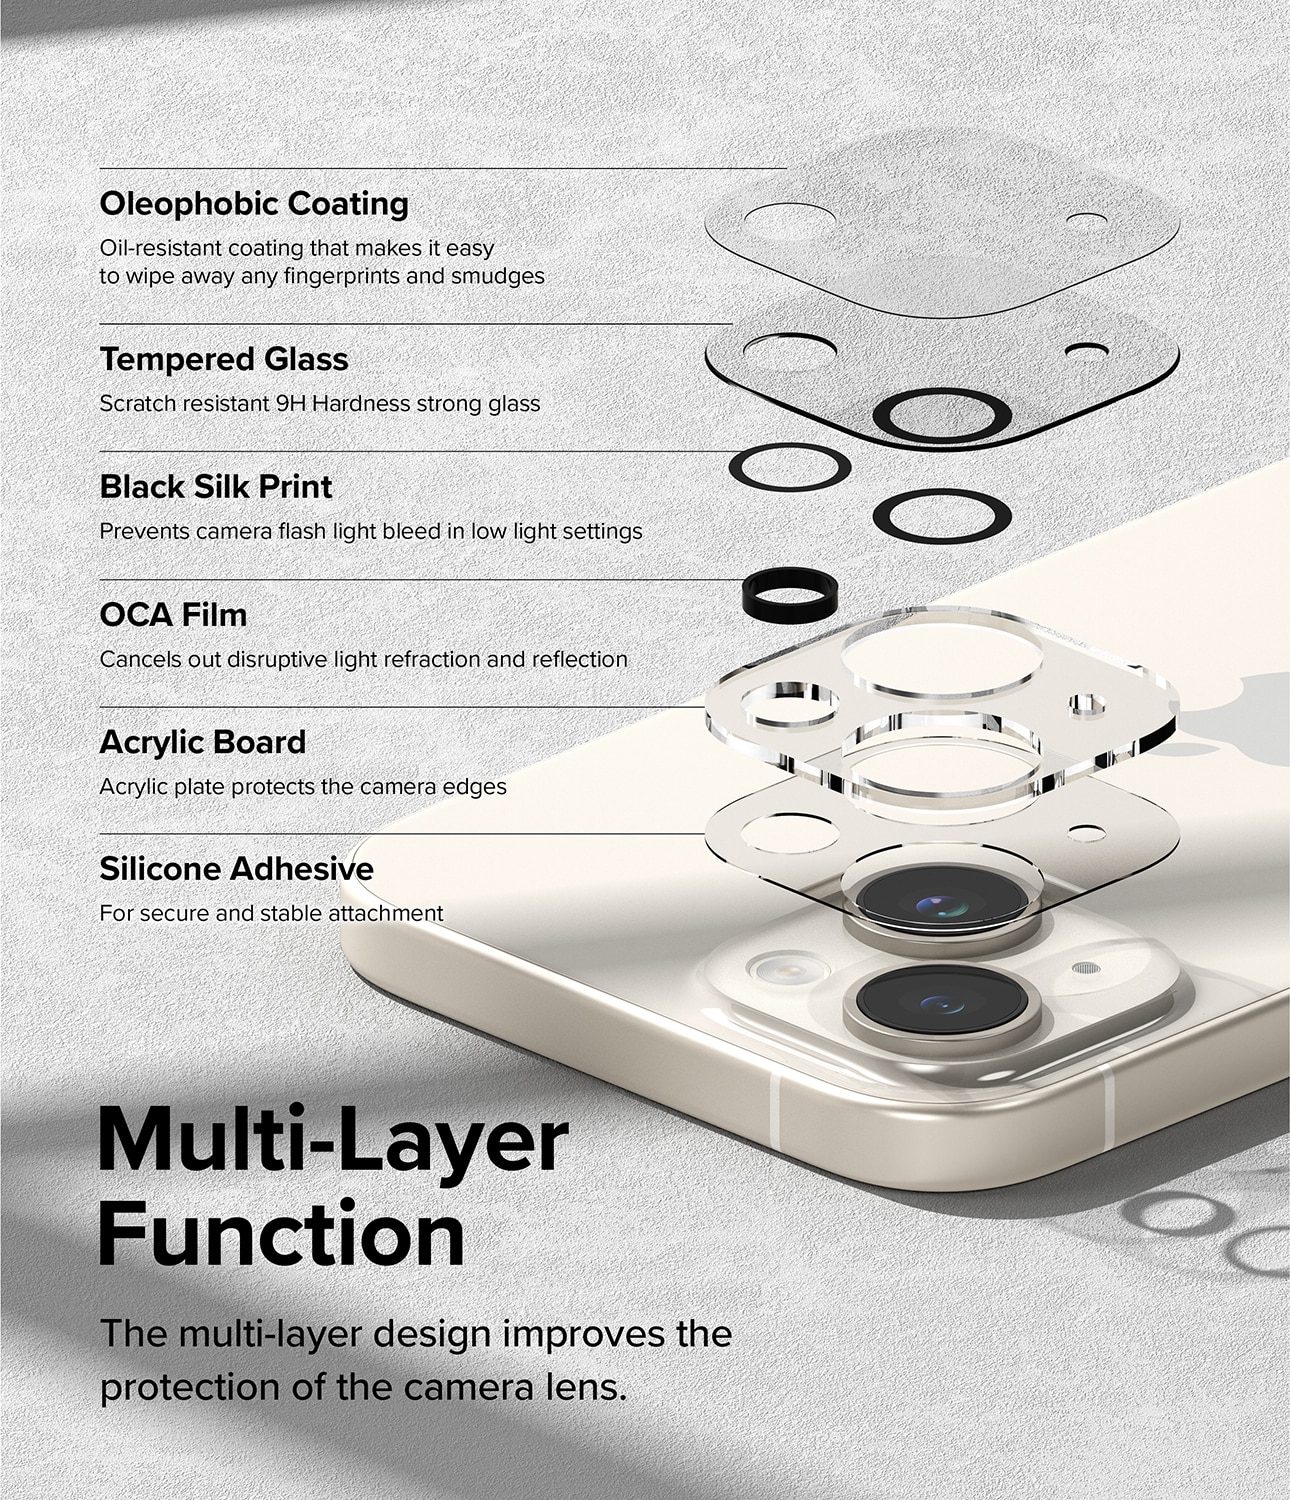 Camera Protector Glass (2 pièces) iPhone 15 Transparent